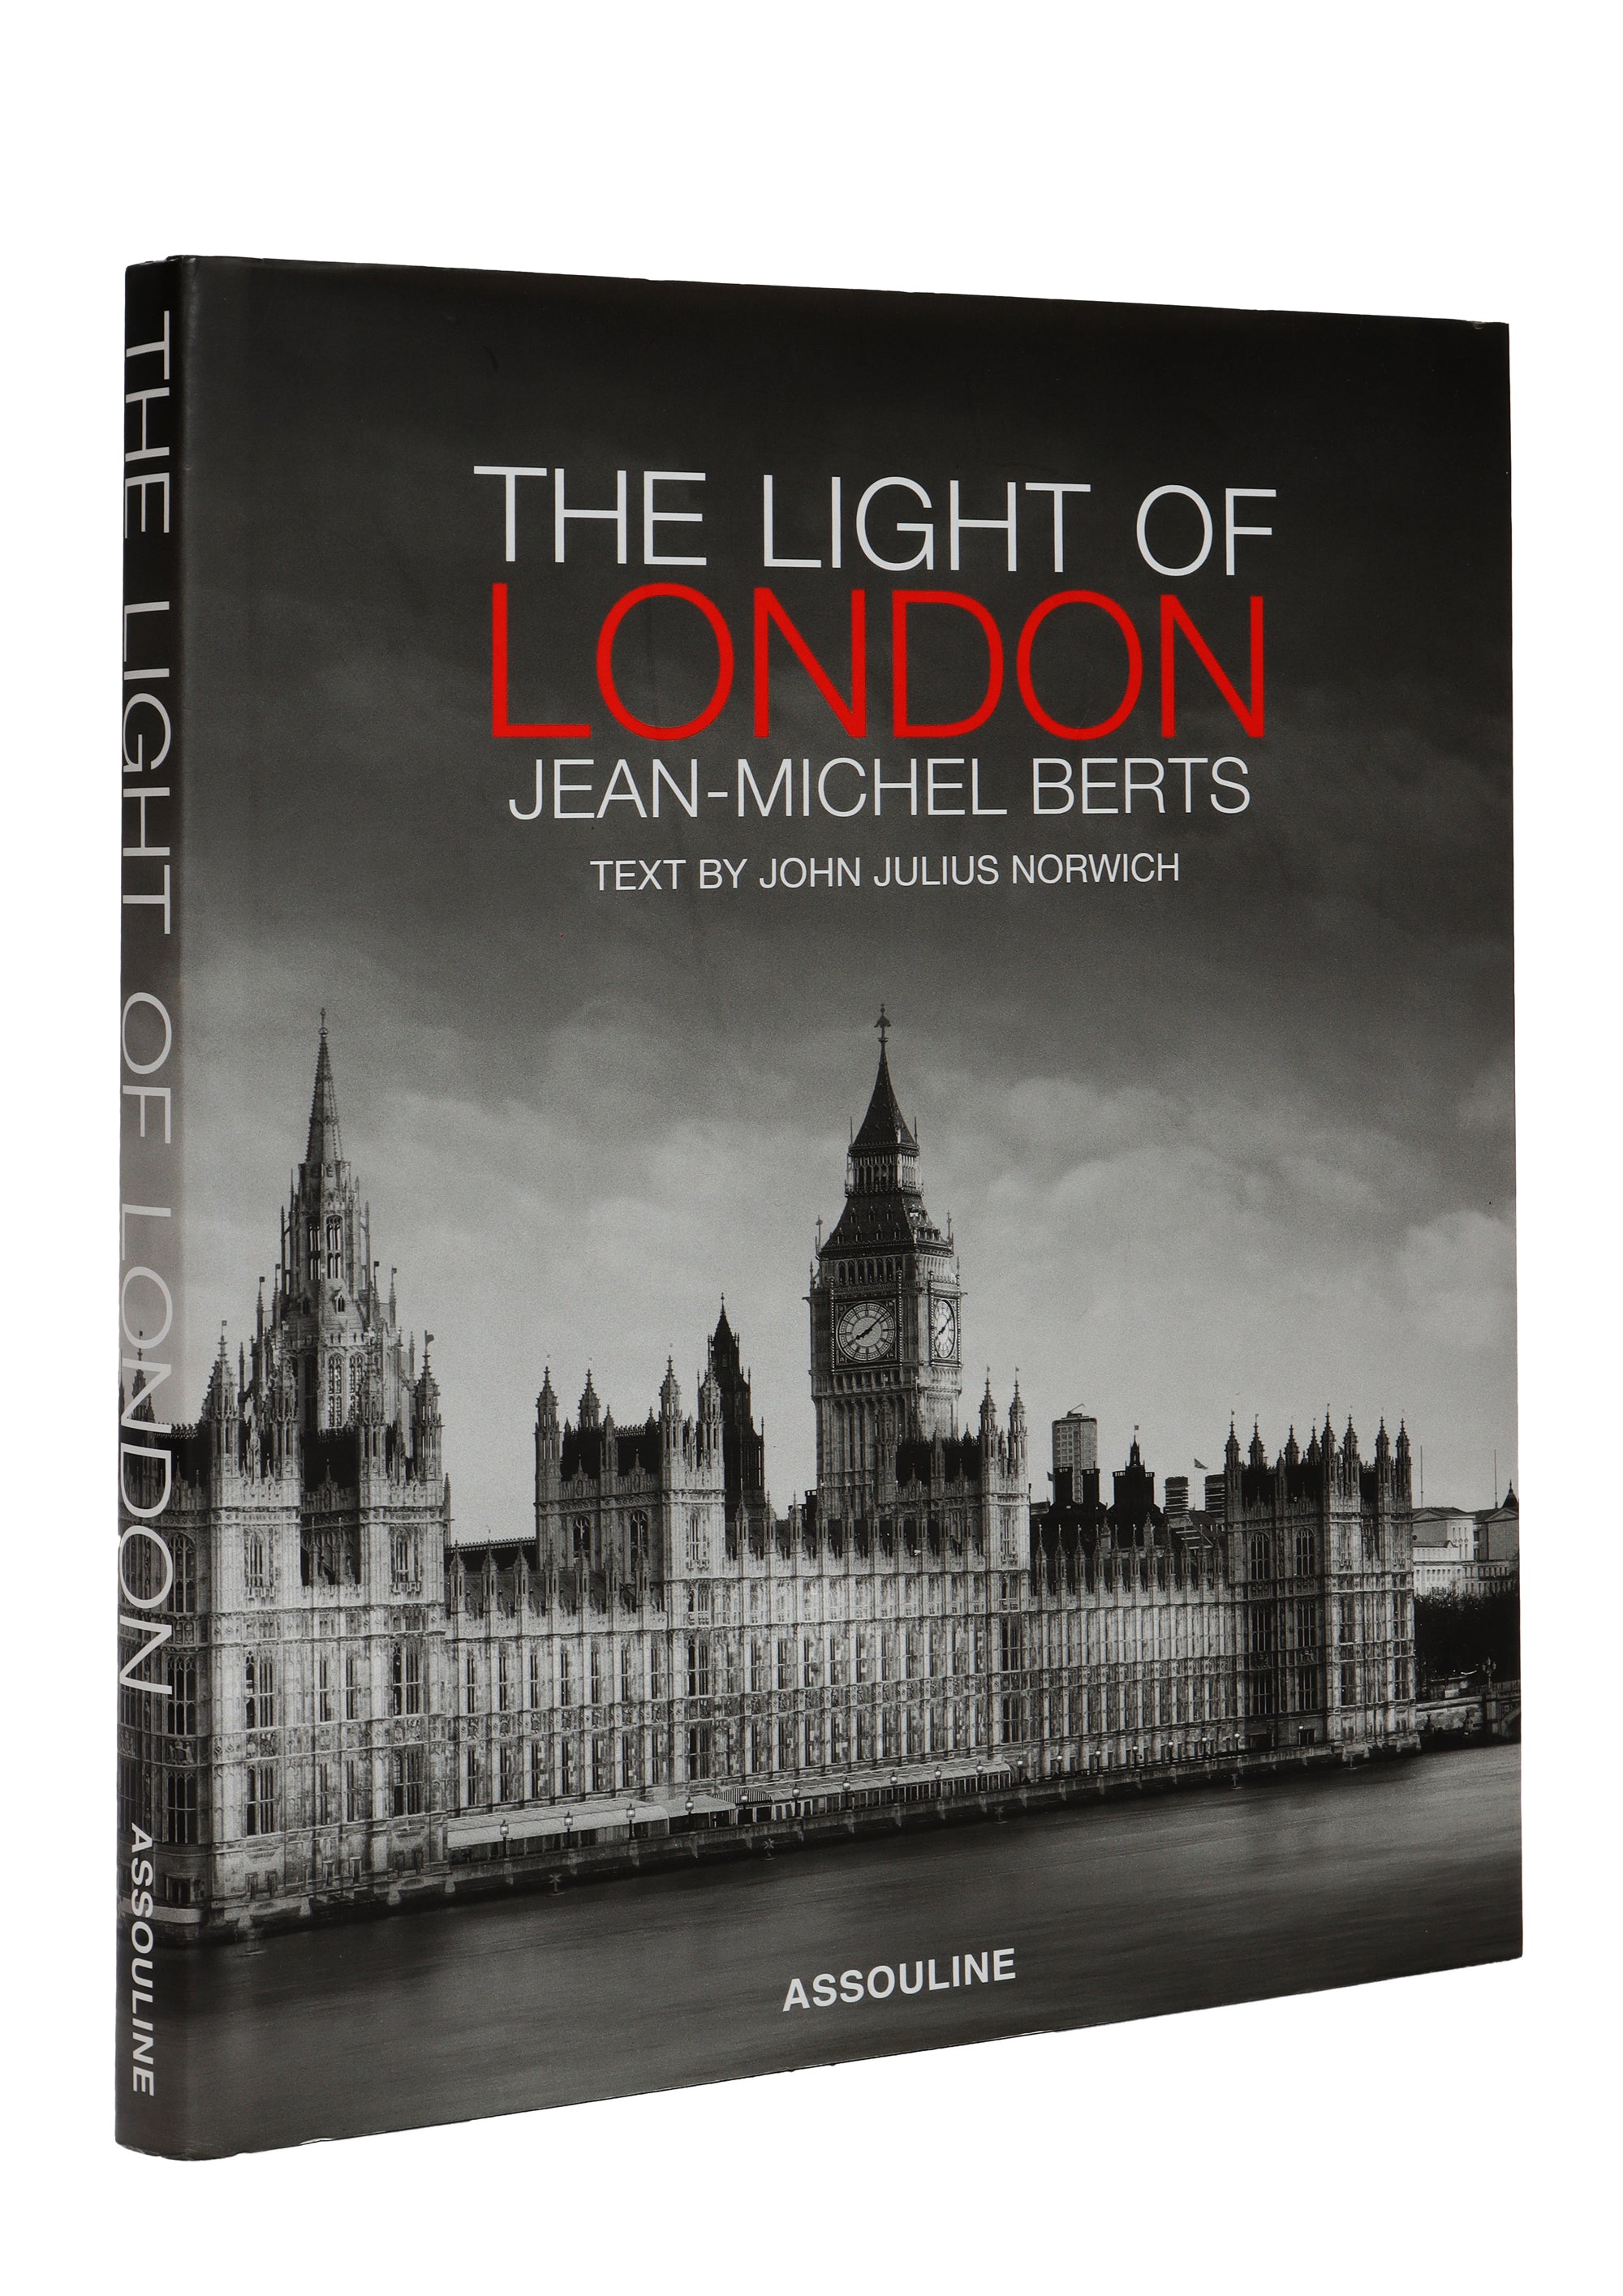 Assouline - The Light of London by Jean-Michel Berts